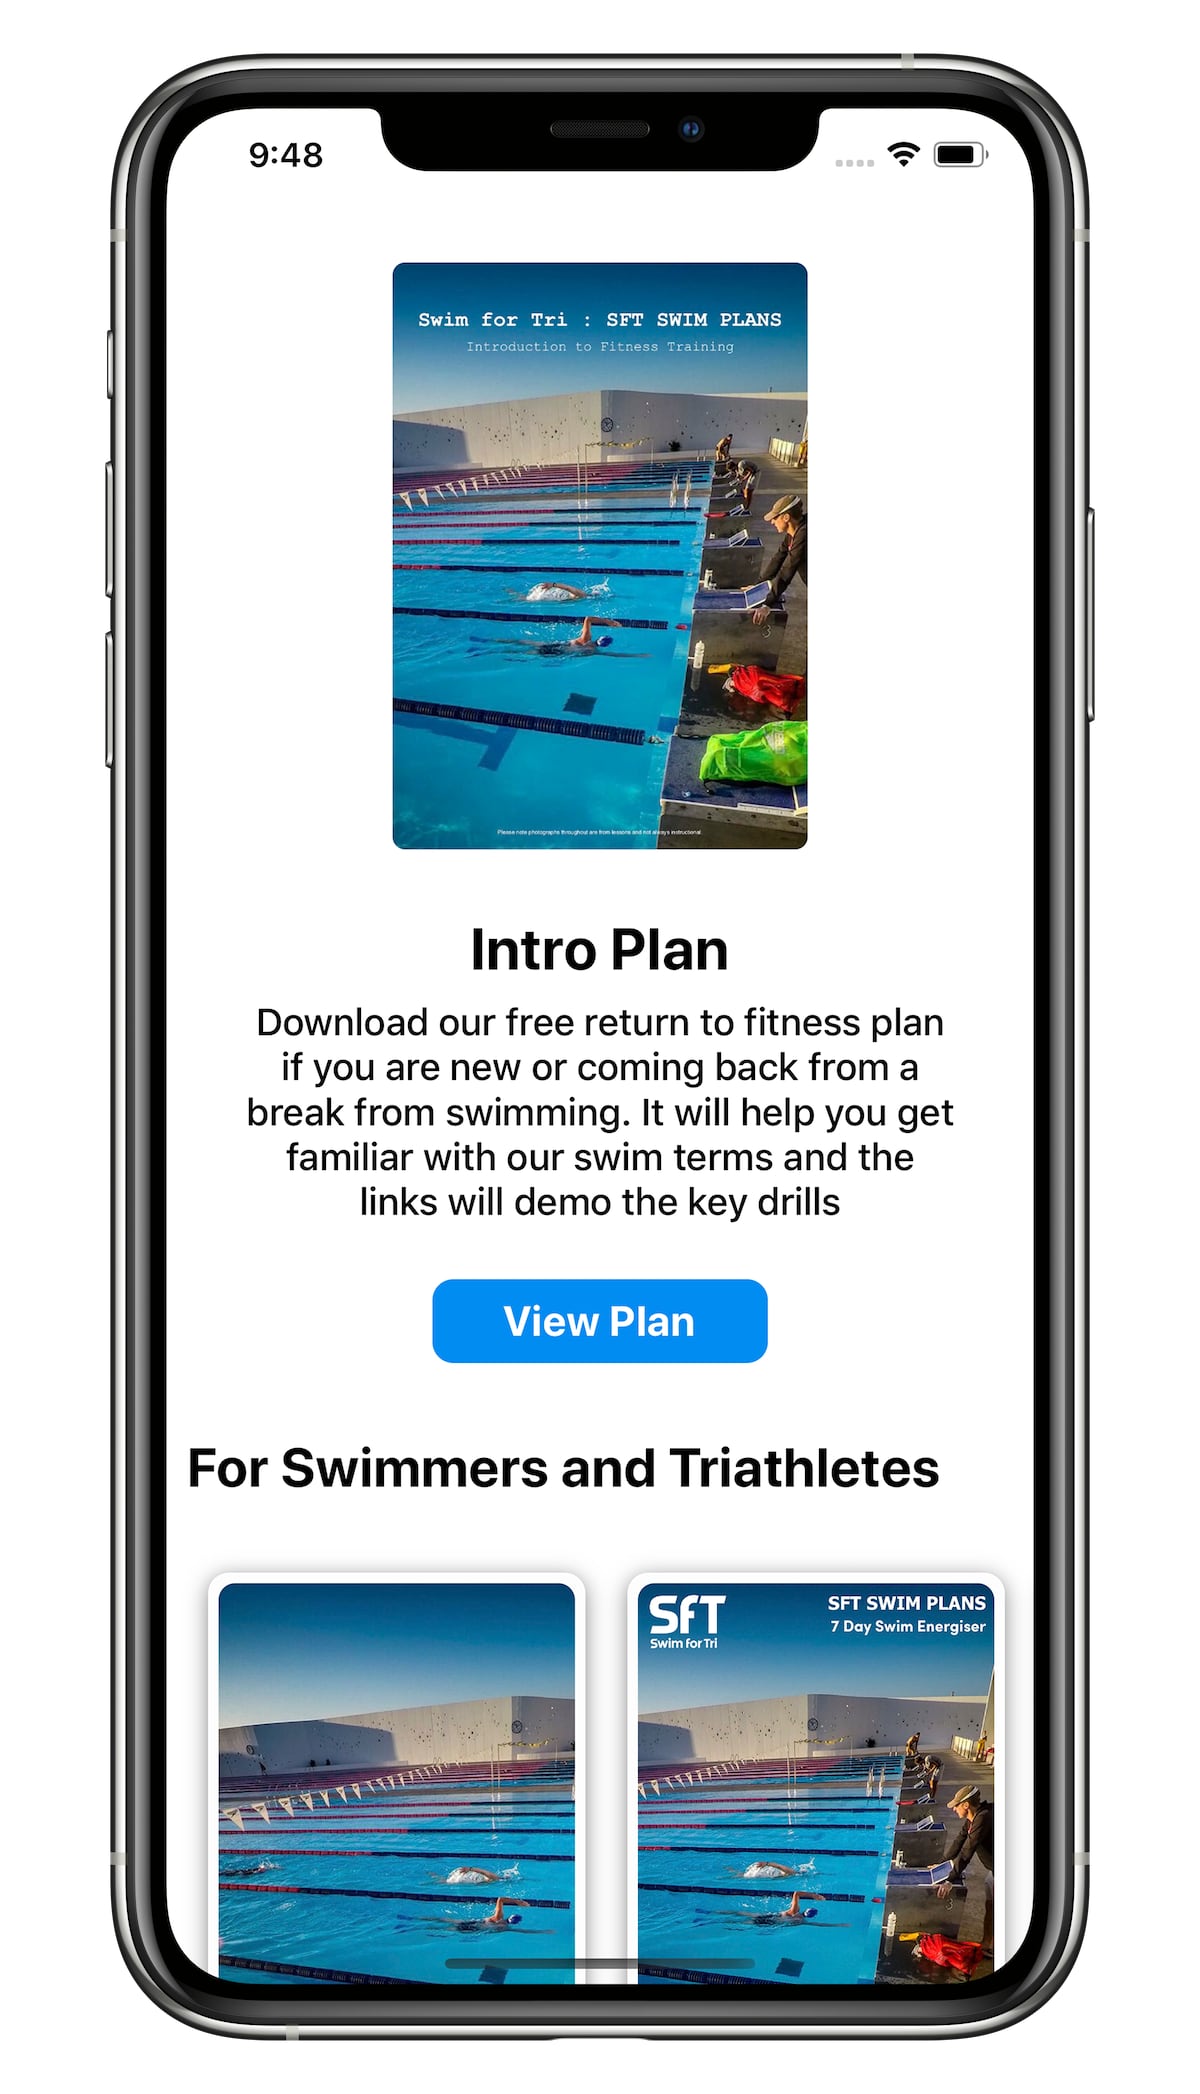 SFT Training Plans App on iPhone